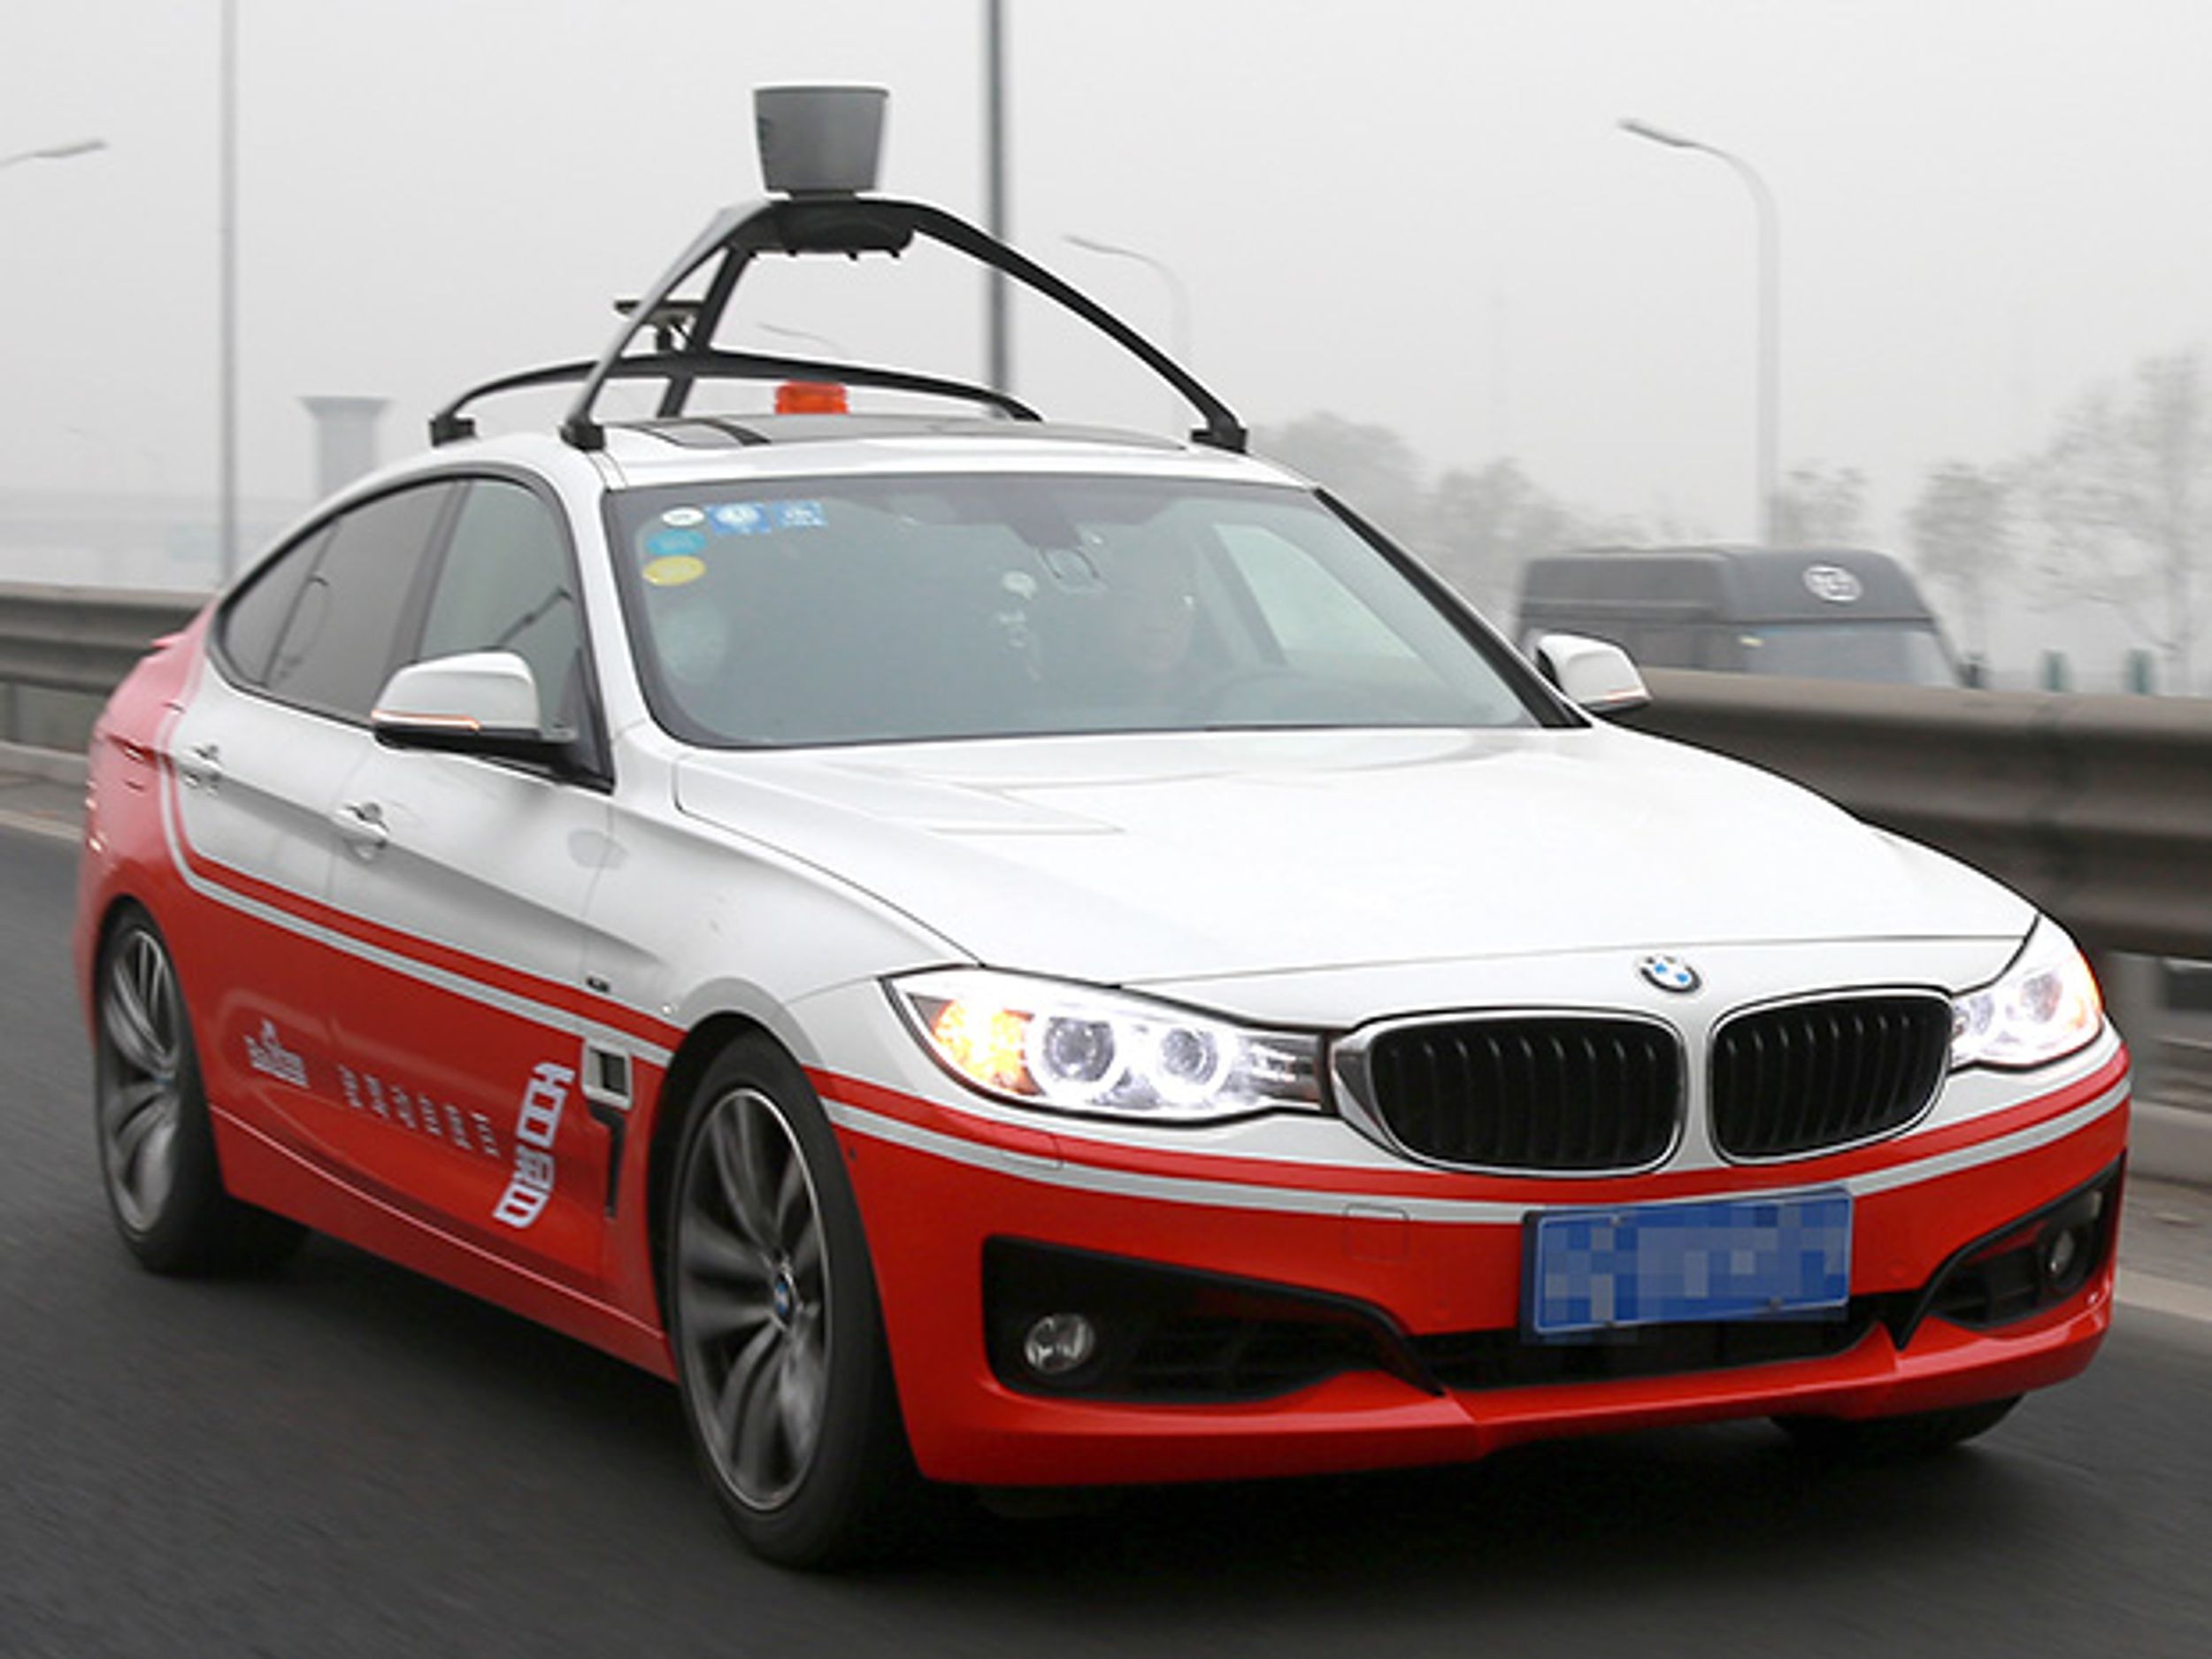 Baidu's Robot Car Marks Self-Driving Milestone in Beijing